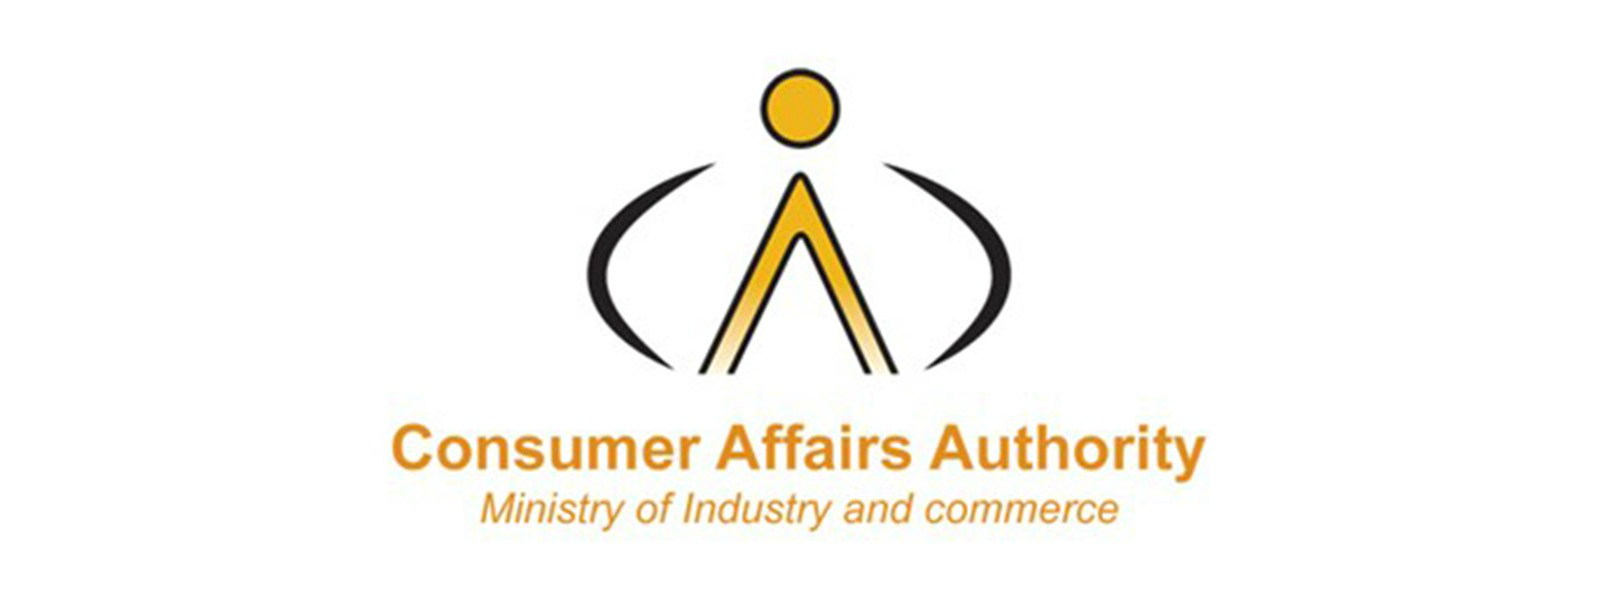 CAA to monitor e-commerce platforms